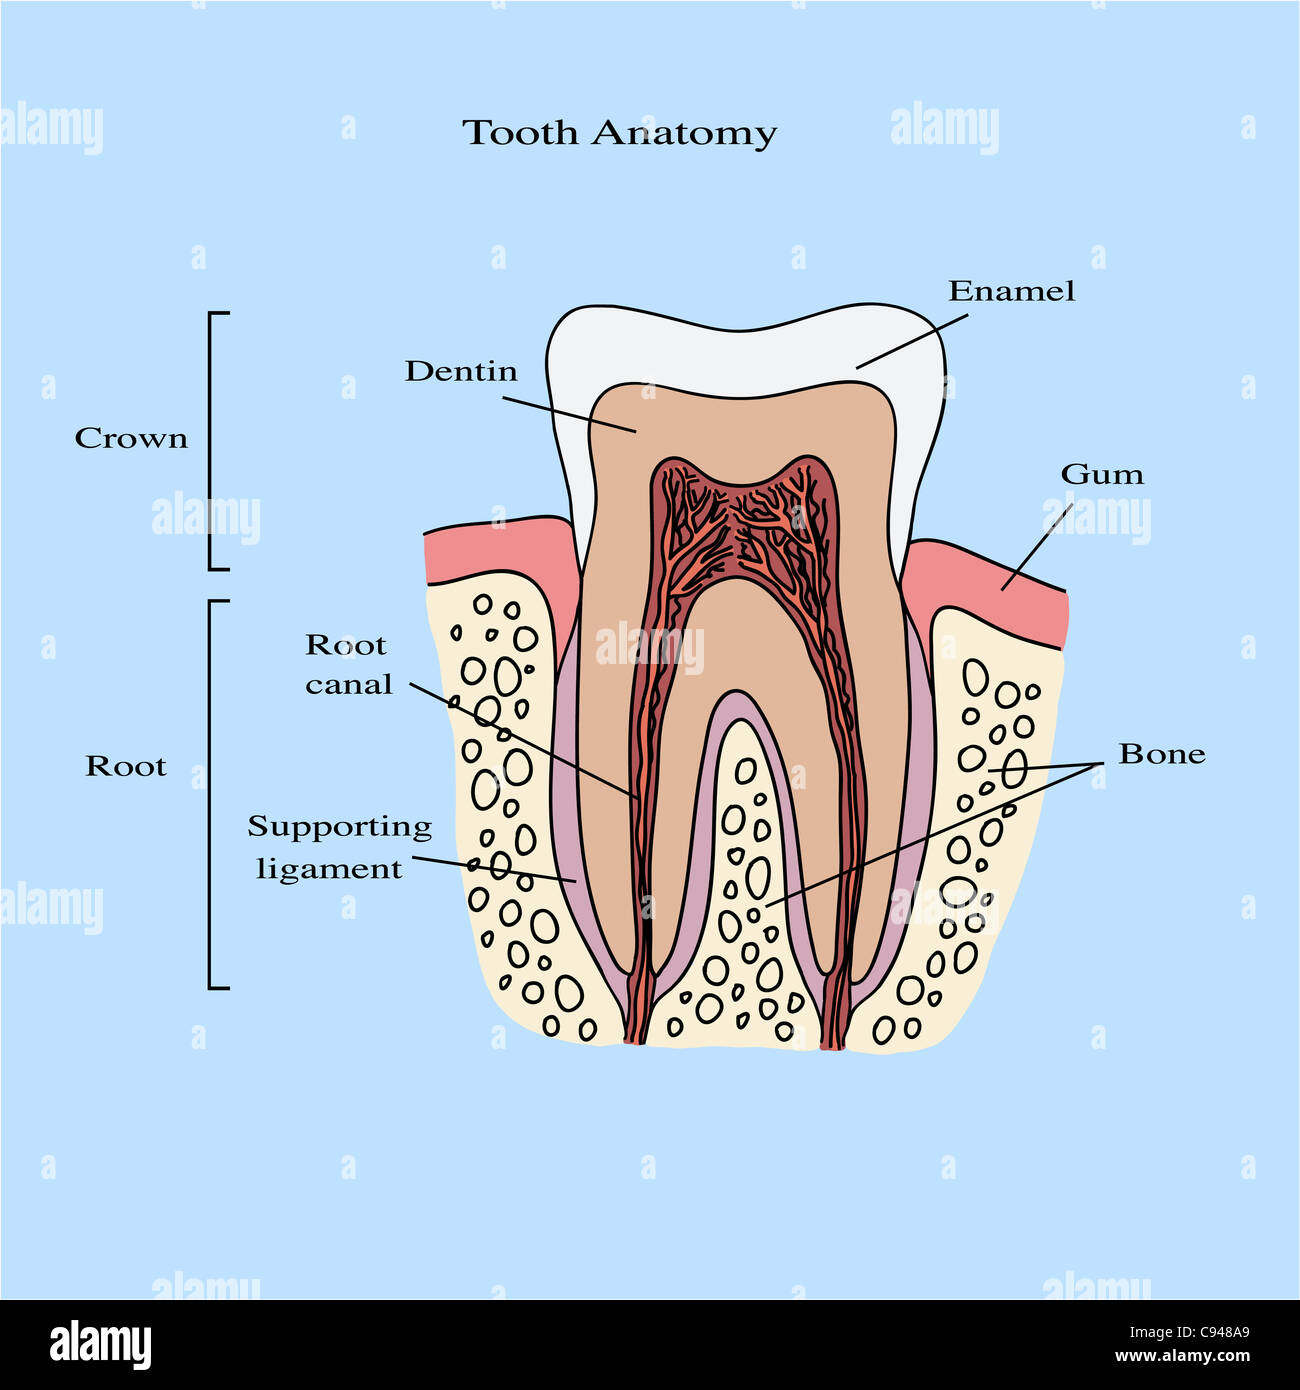 Human tooth anatomy illustration Stock Photo